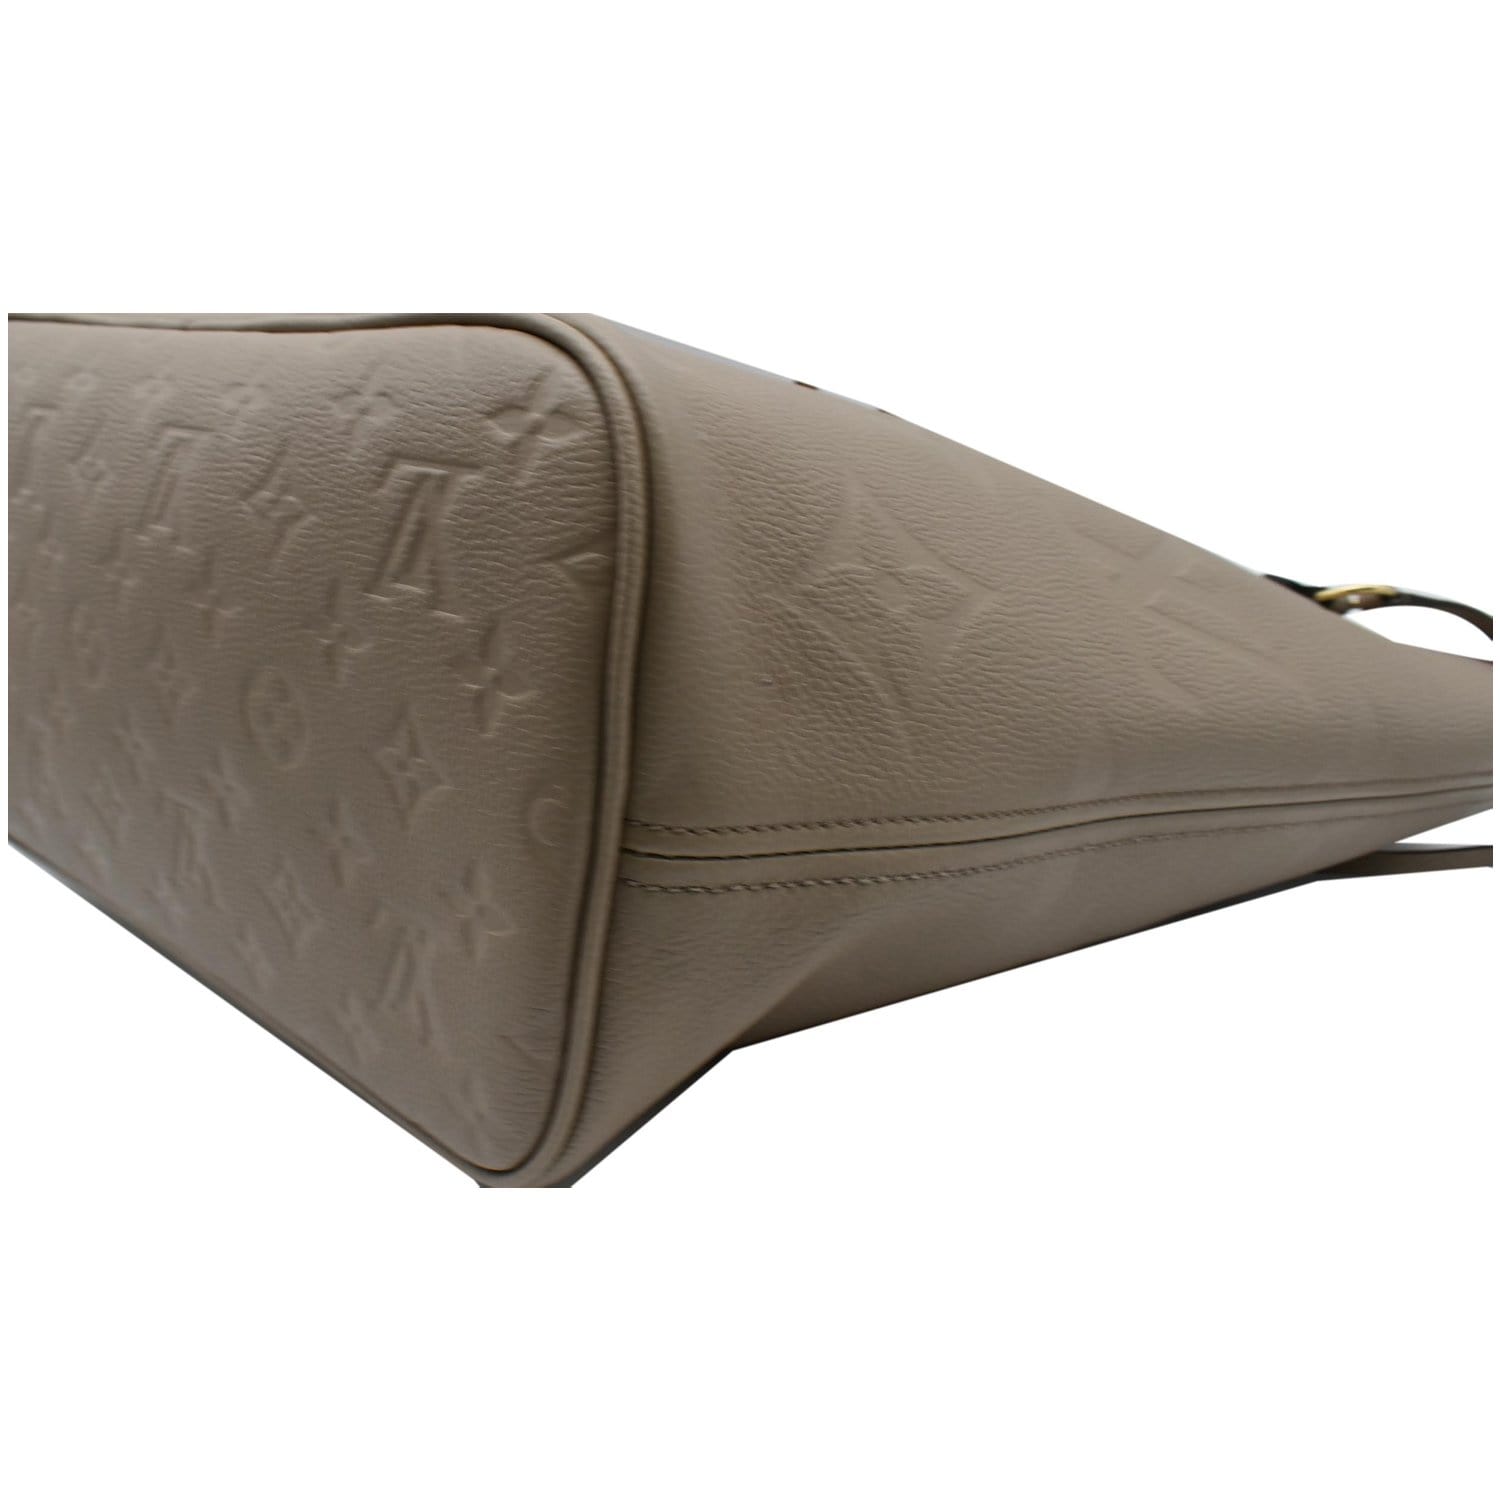 Louis Vuitton Neverfull MM Monogram Bags Handbags Purse (Beige): Handbags:  .com